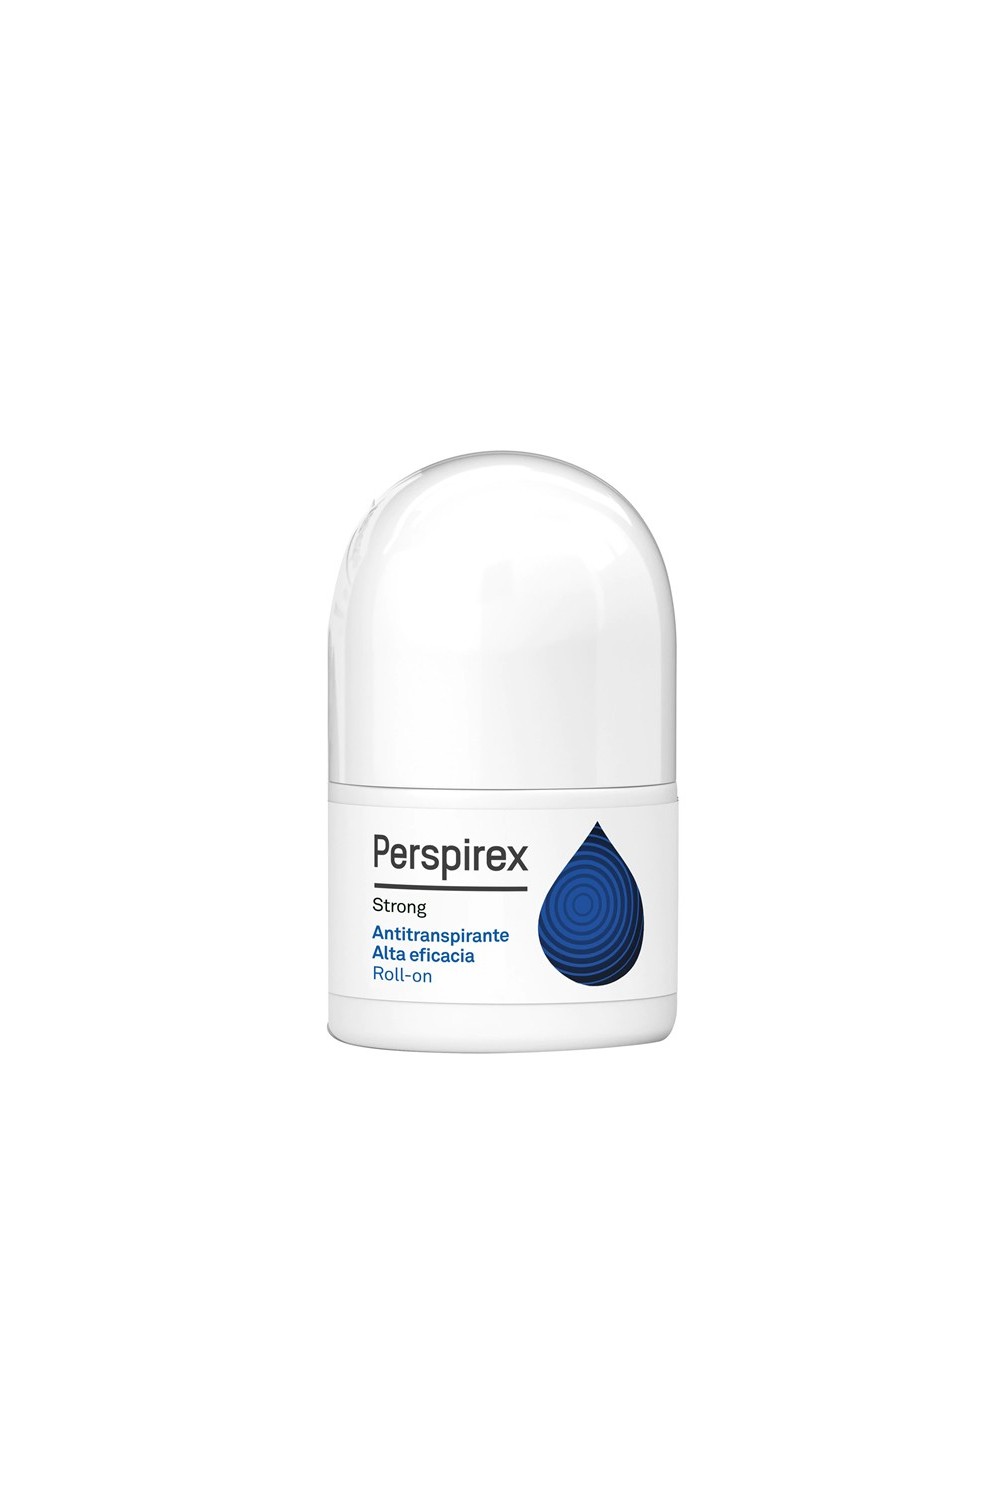 Perspirex Deodorant Strong Roll-on Antiperspirant 20ml